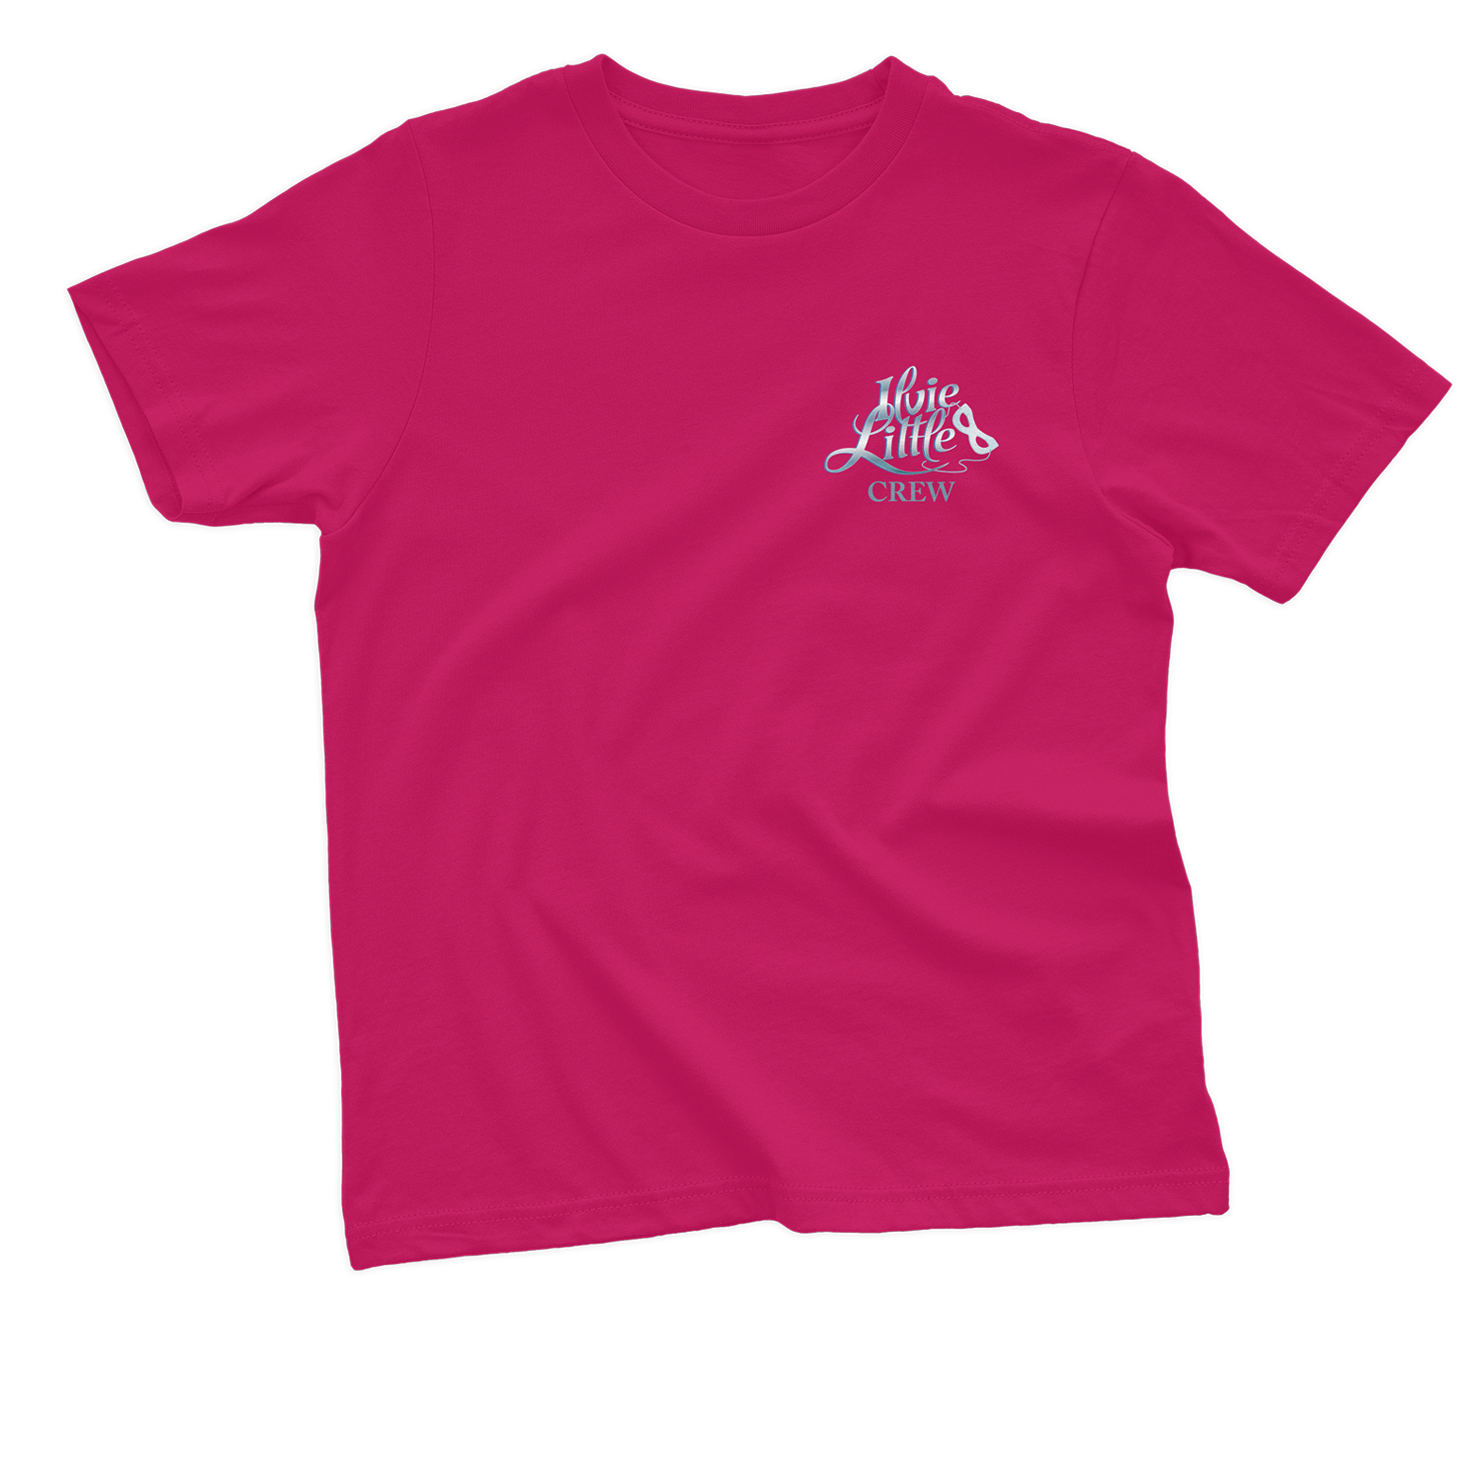 ILVIE LITTLE CREW T-Shirt (Teenager).